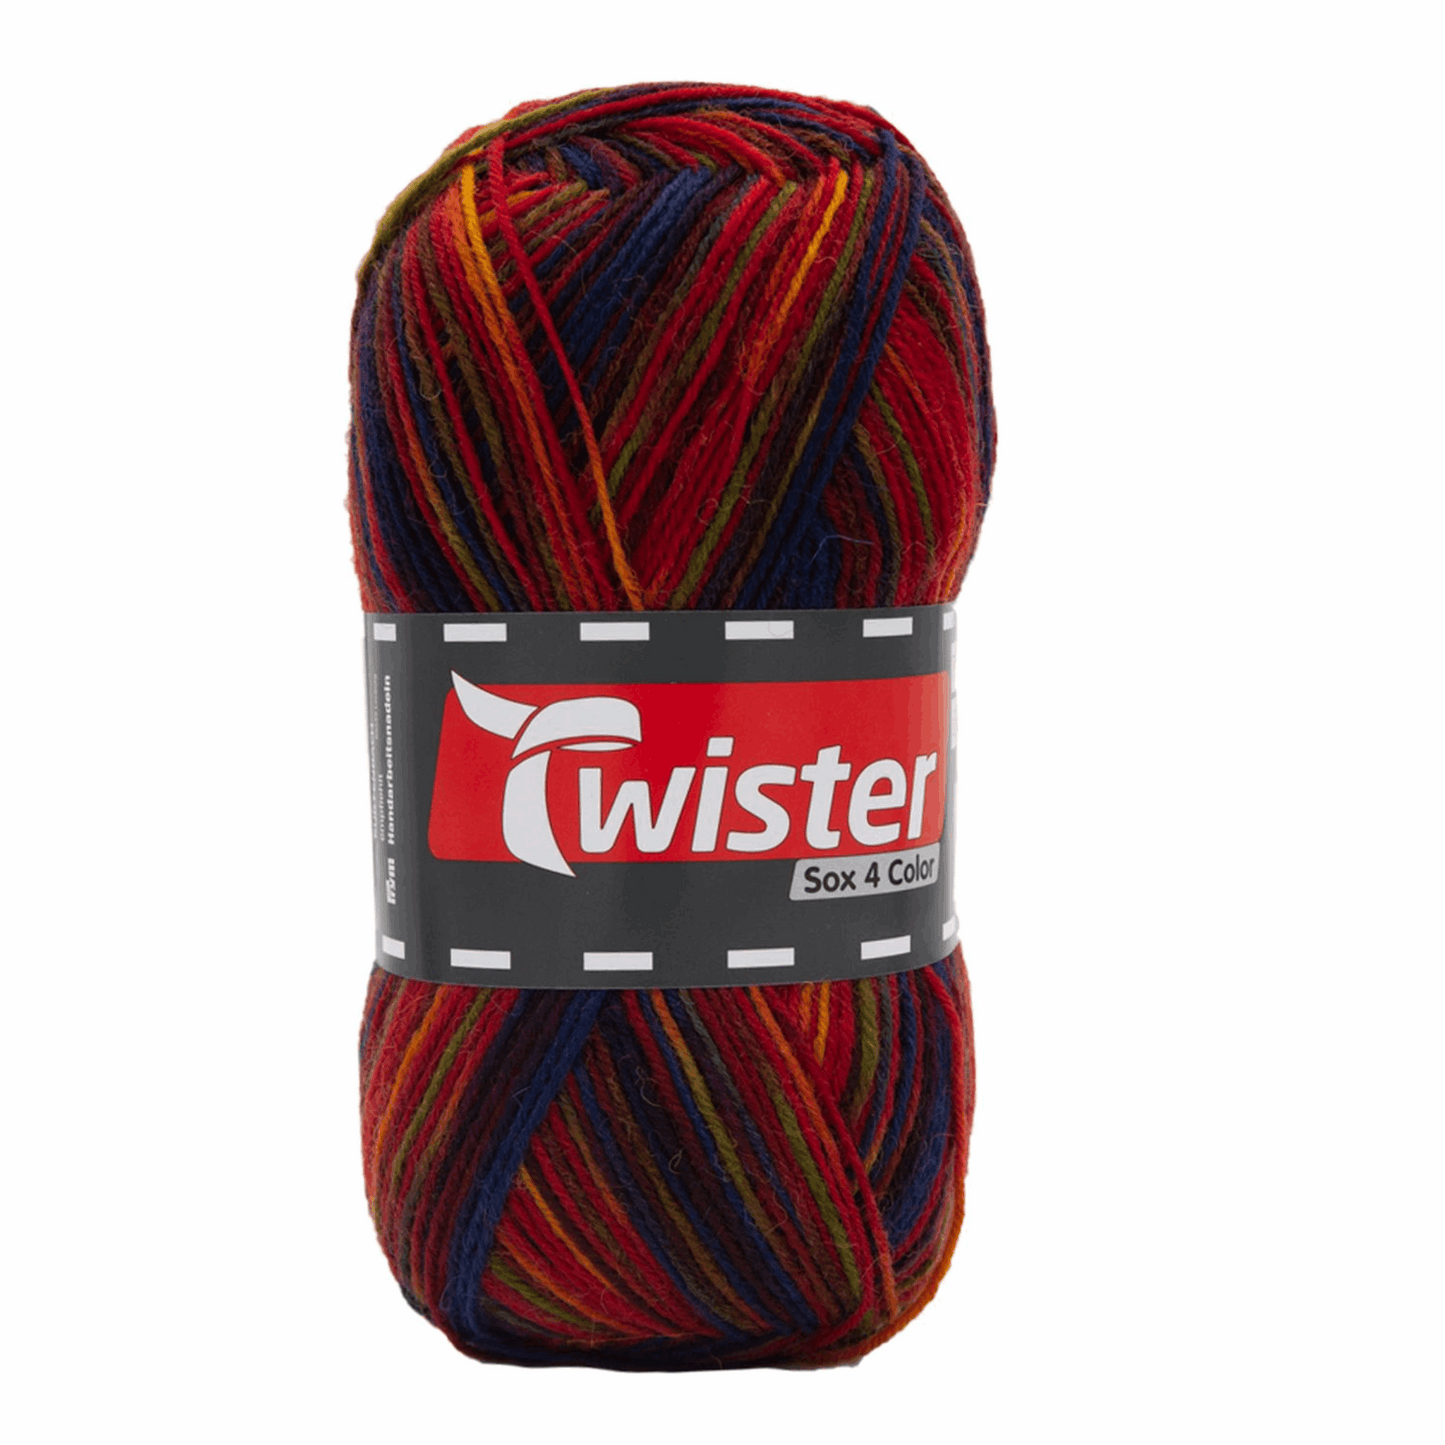 Twister Sox4 Color superwash, red multi, 98306, color 135